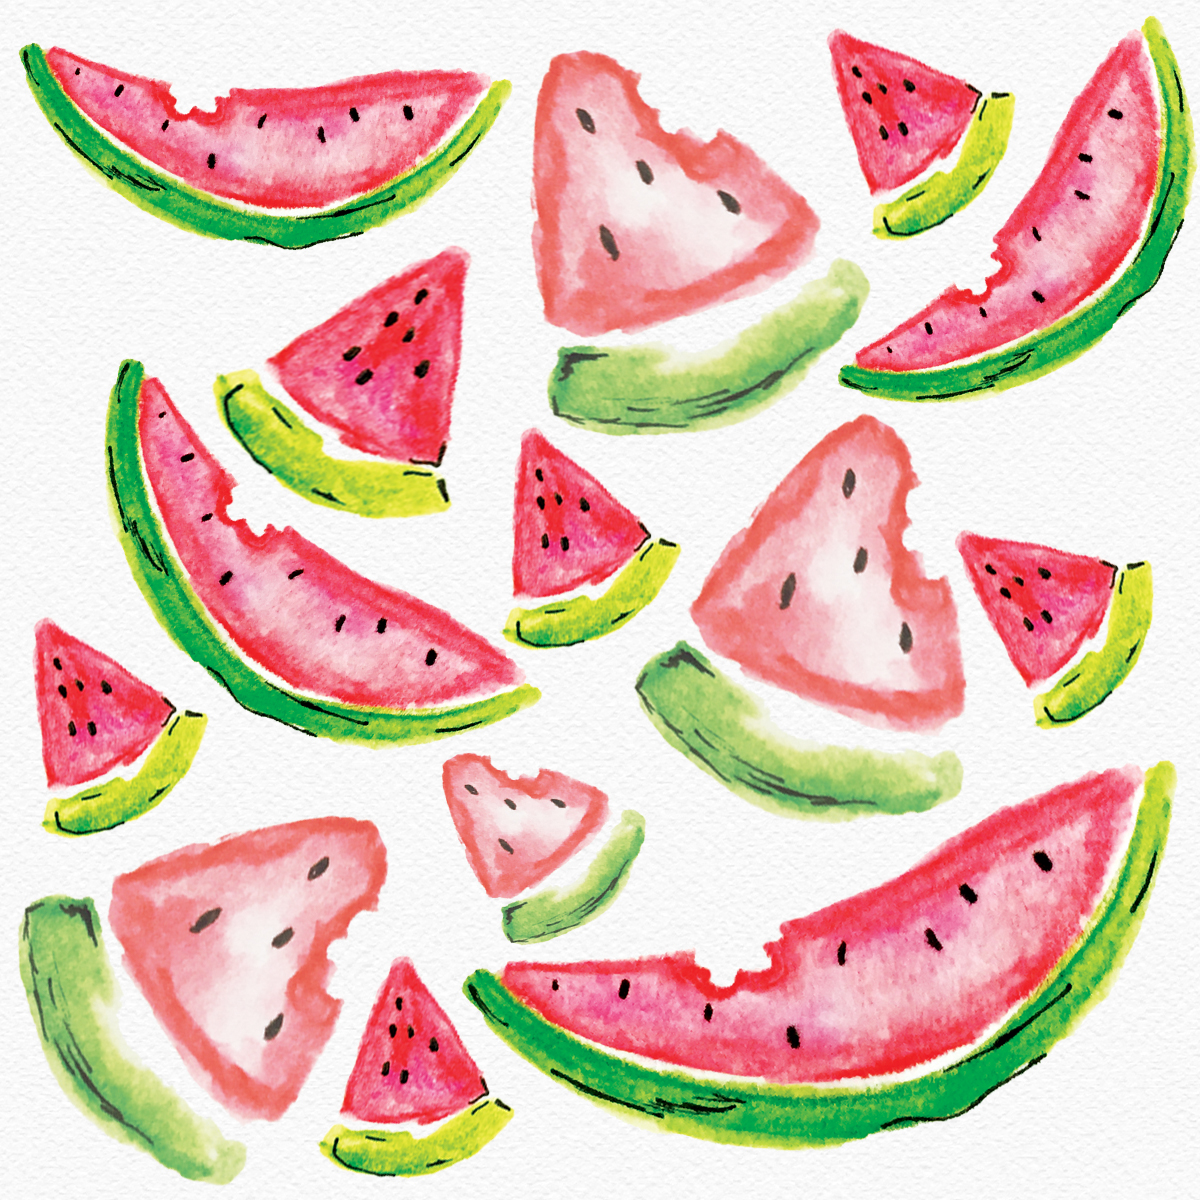 Watermelon art2